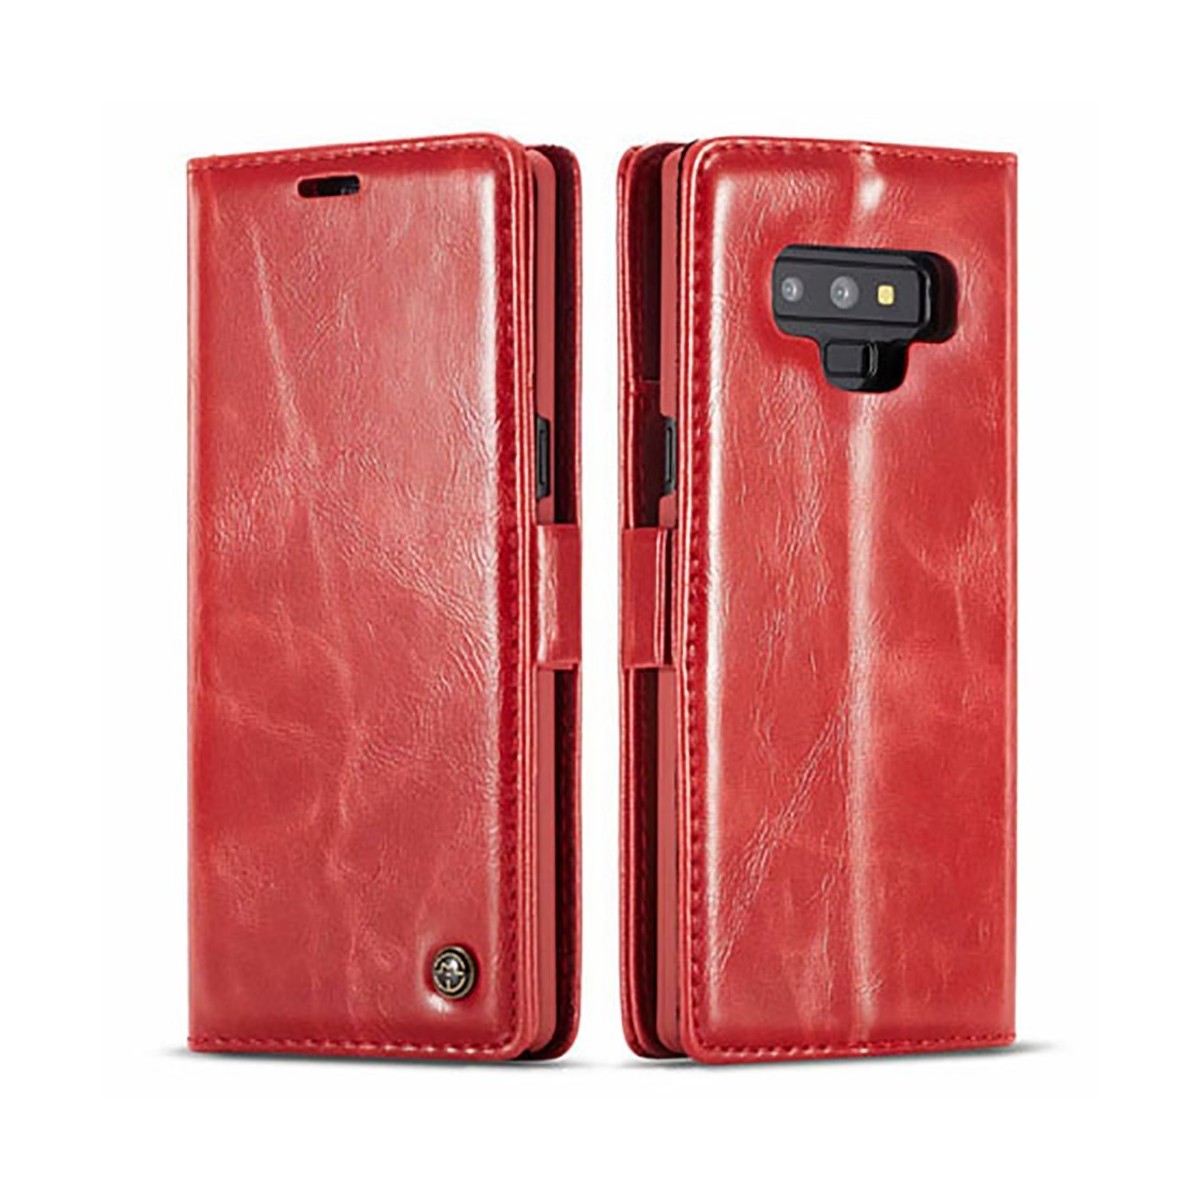 Etui Galaxy Note 9 porte-cartes Rouge - CaseMe